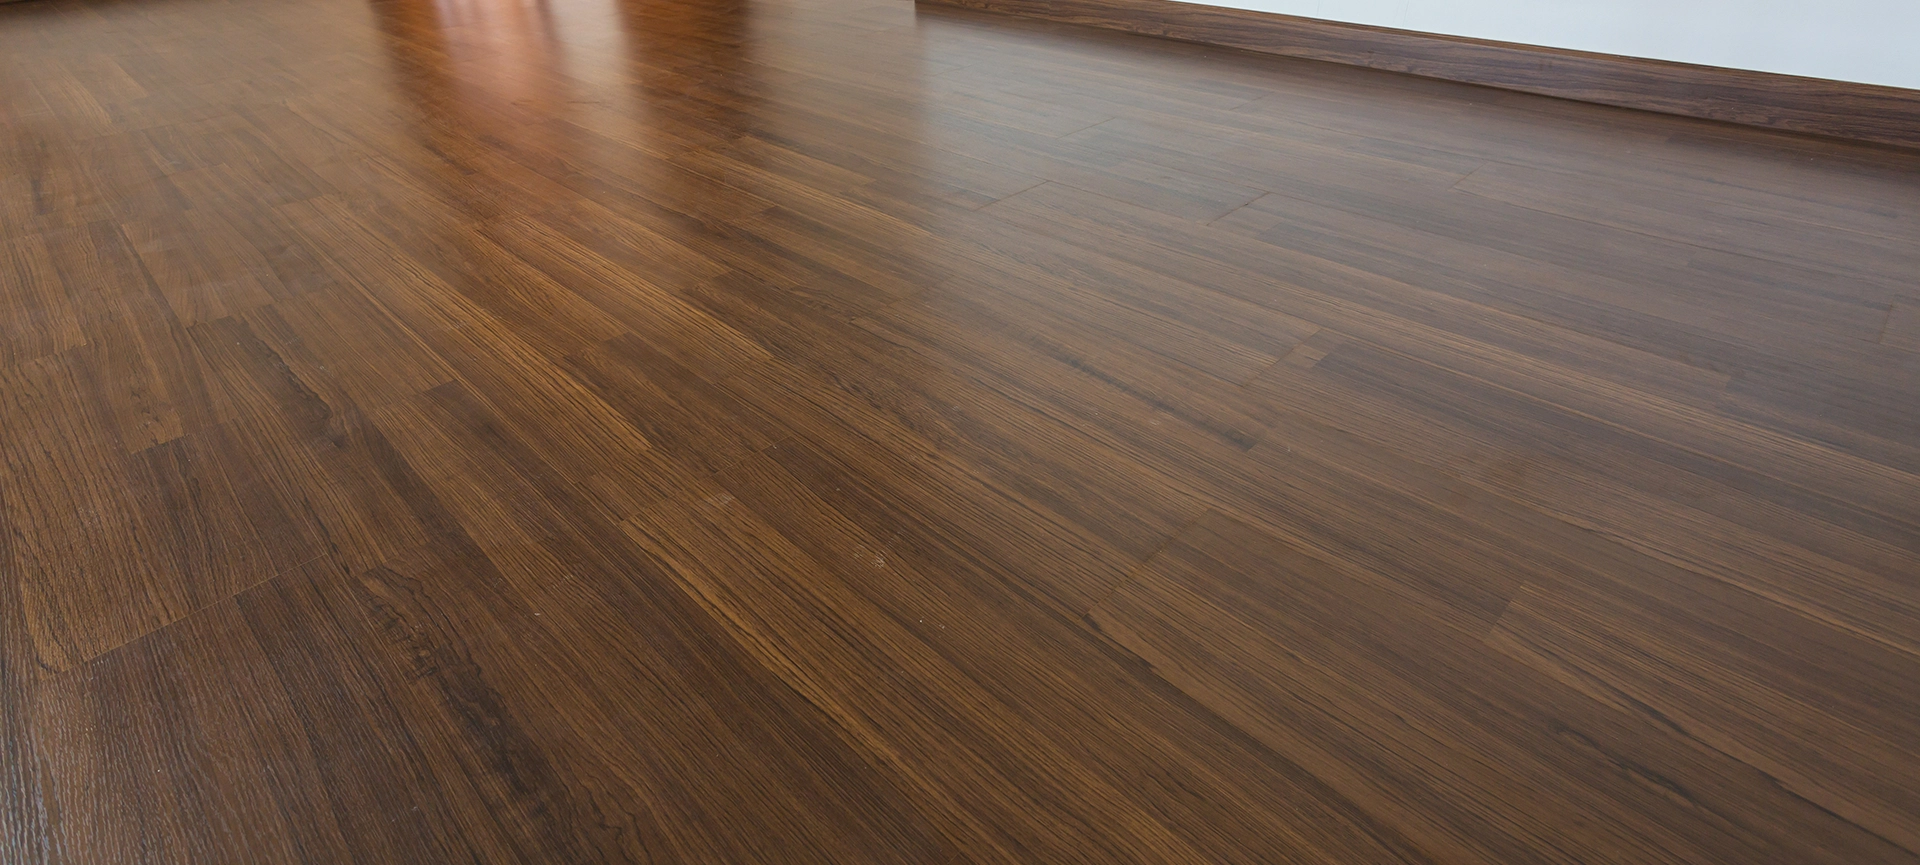 walnut hardwood flooring